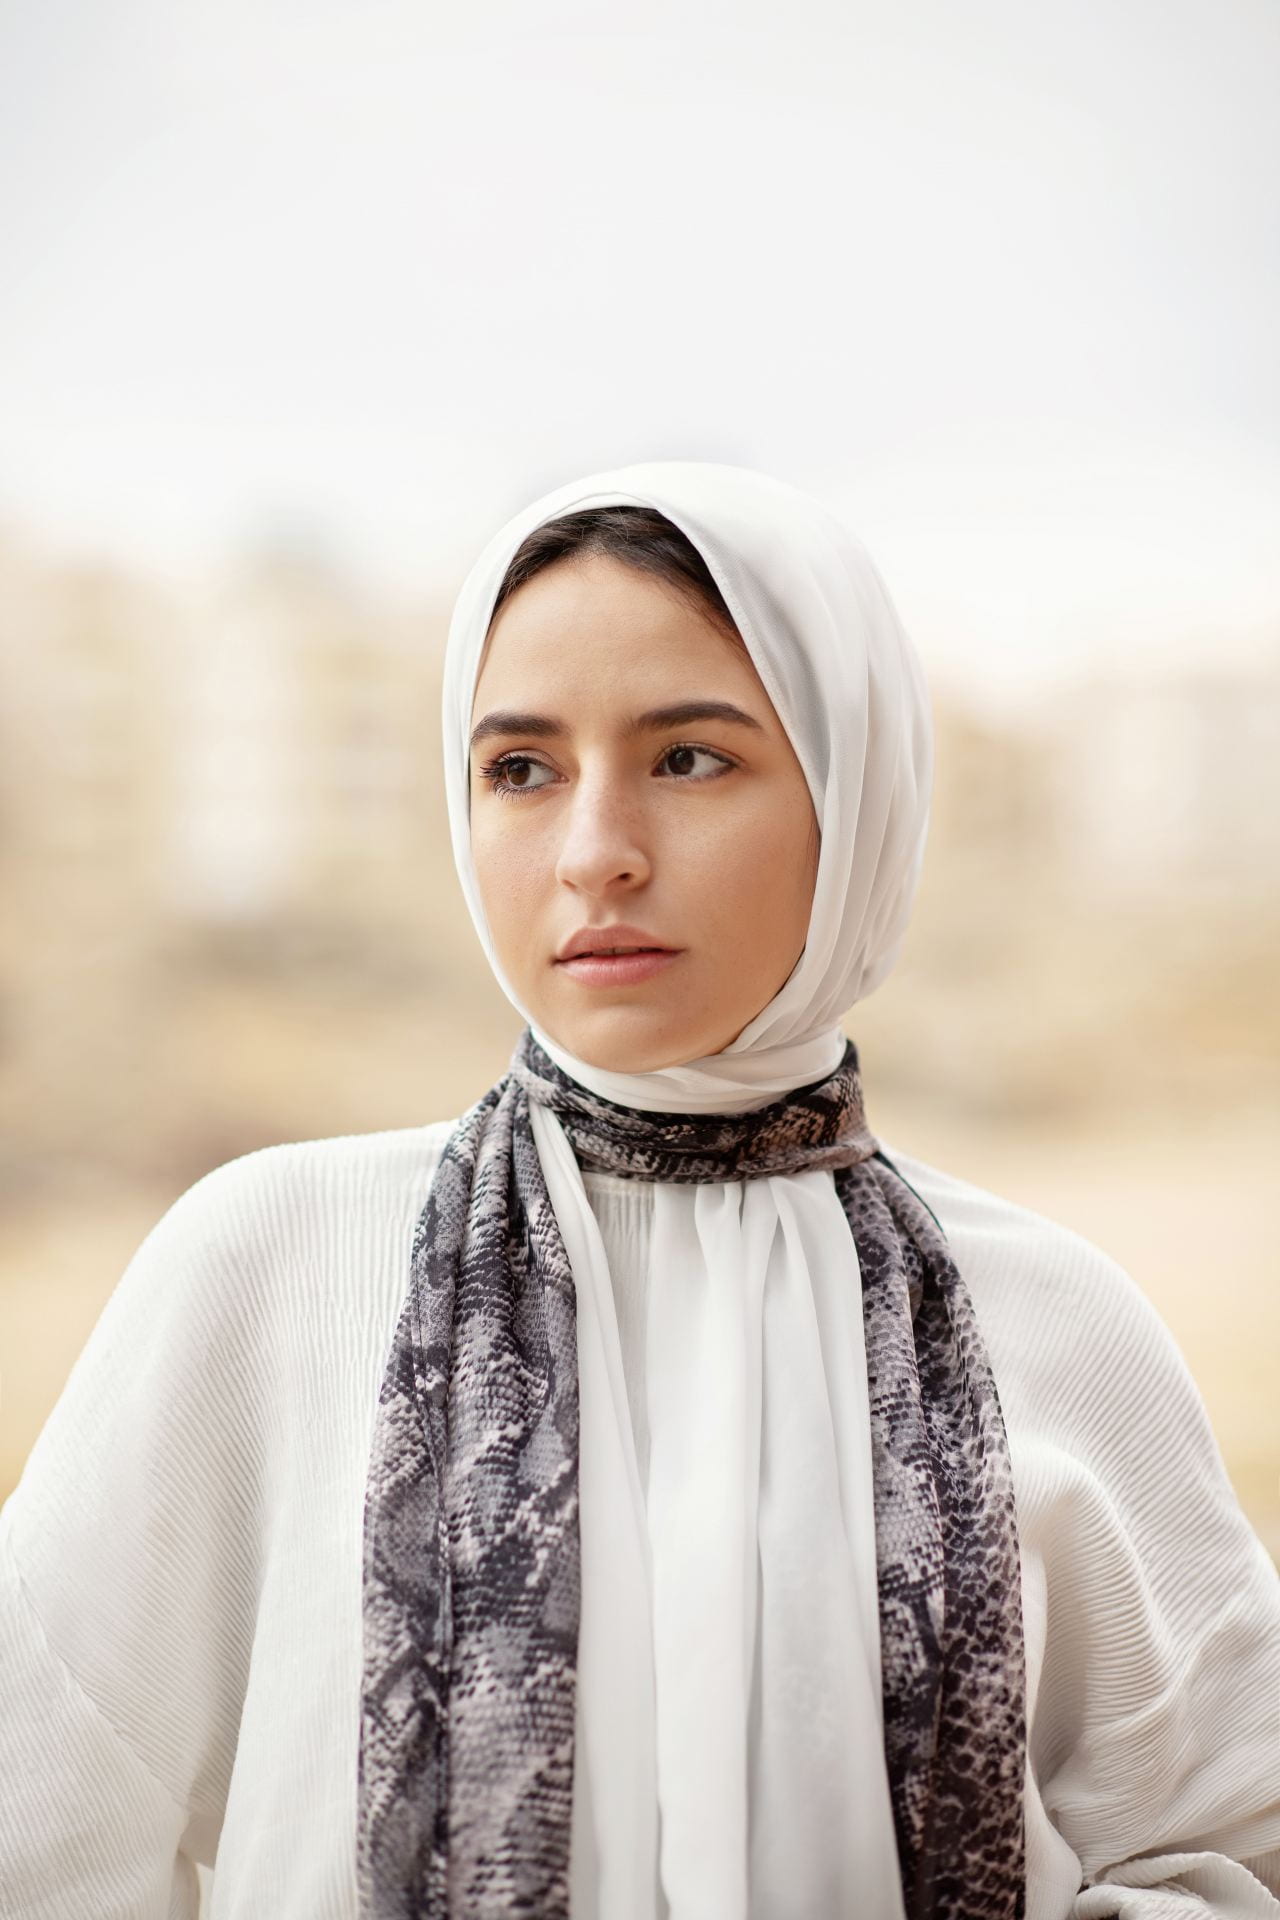 Muslim woman wearing a head covering